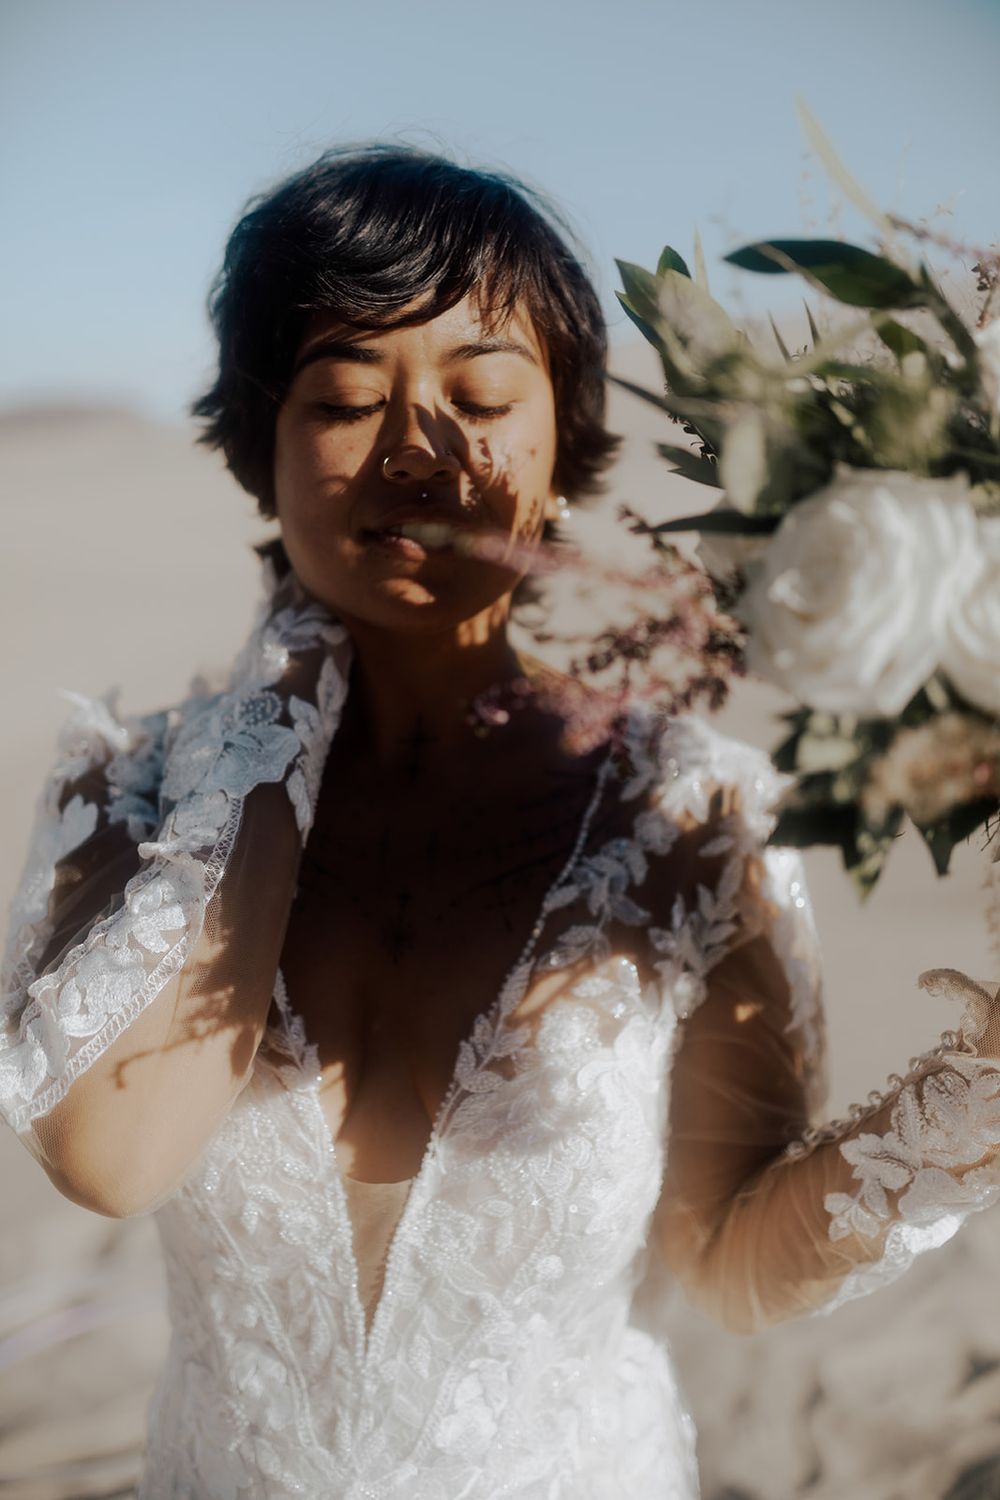 bride with bridal bouquet shadow on face in sand dunes desert nevada taken by katherine krakowski